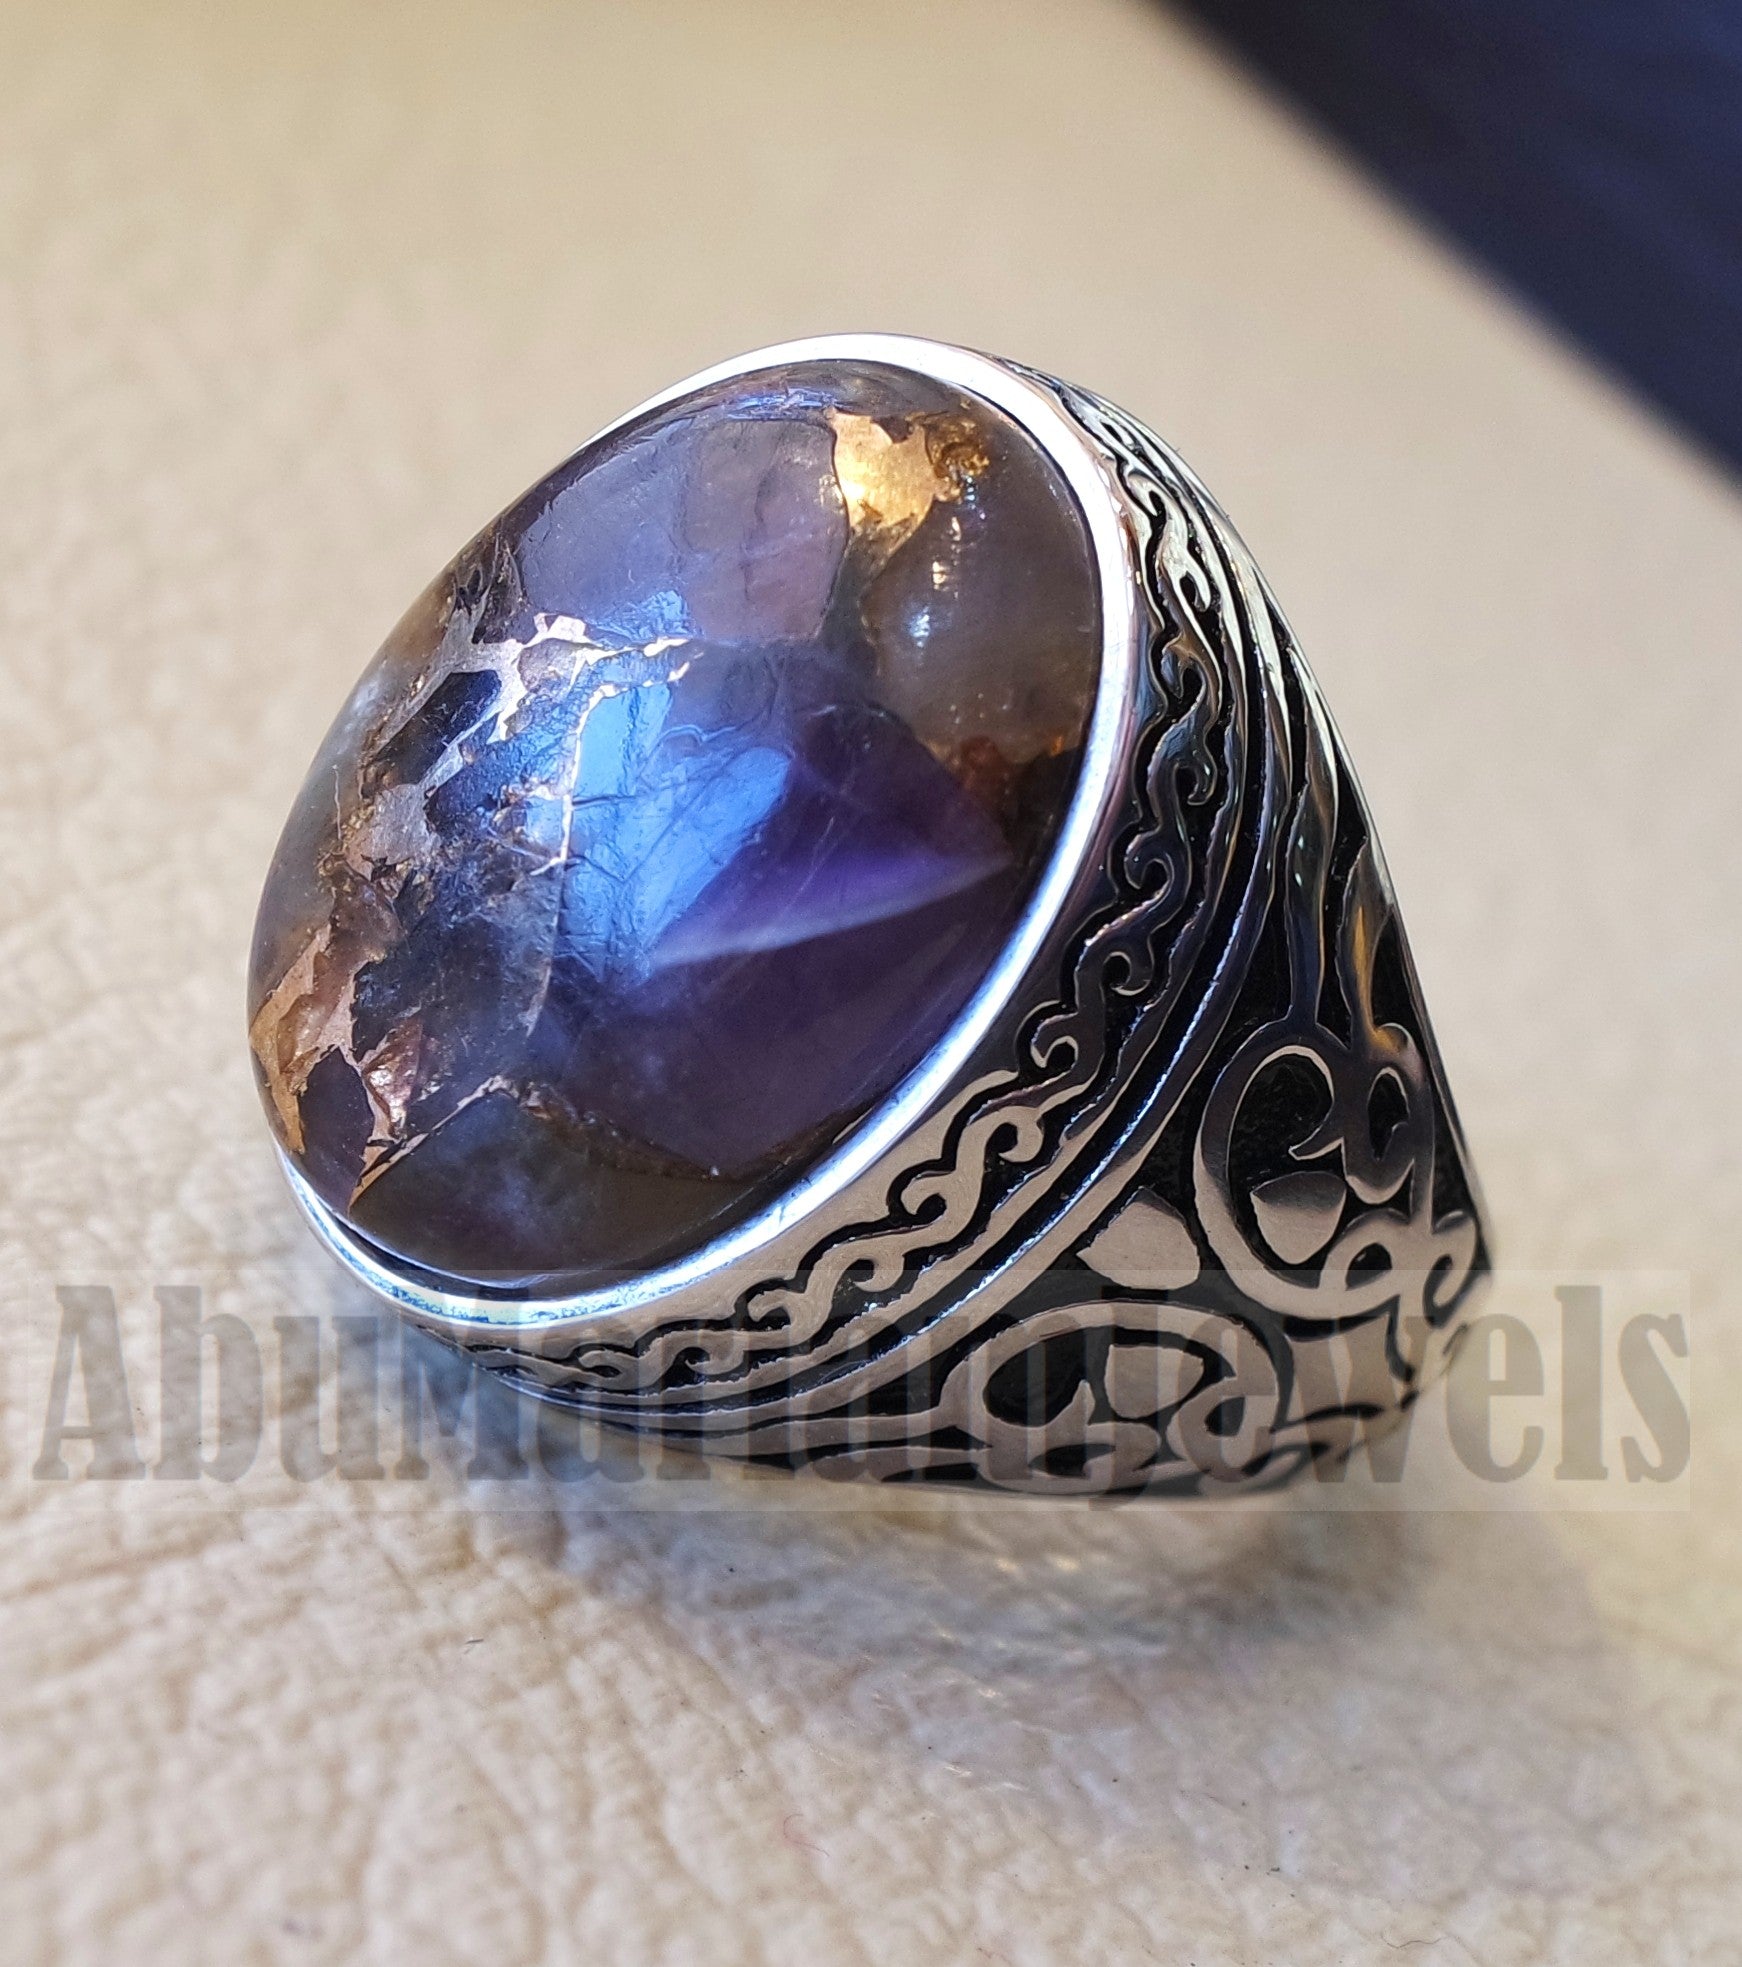 copper amethyst man ring natural purple stone sterling silver 925 oval cabochon semi precious gem ottoman arabic style all sizes jewelry